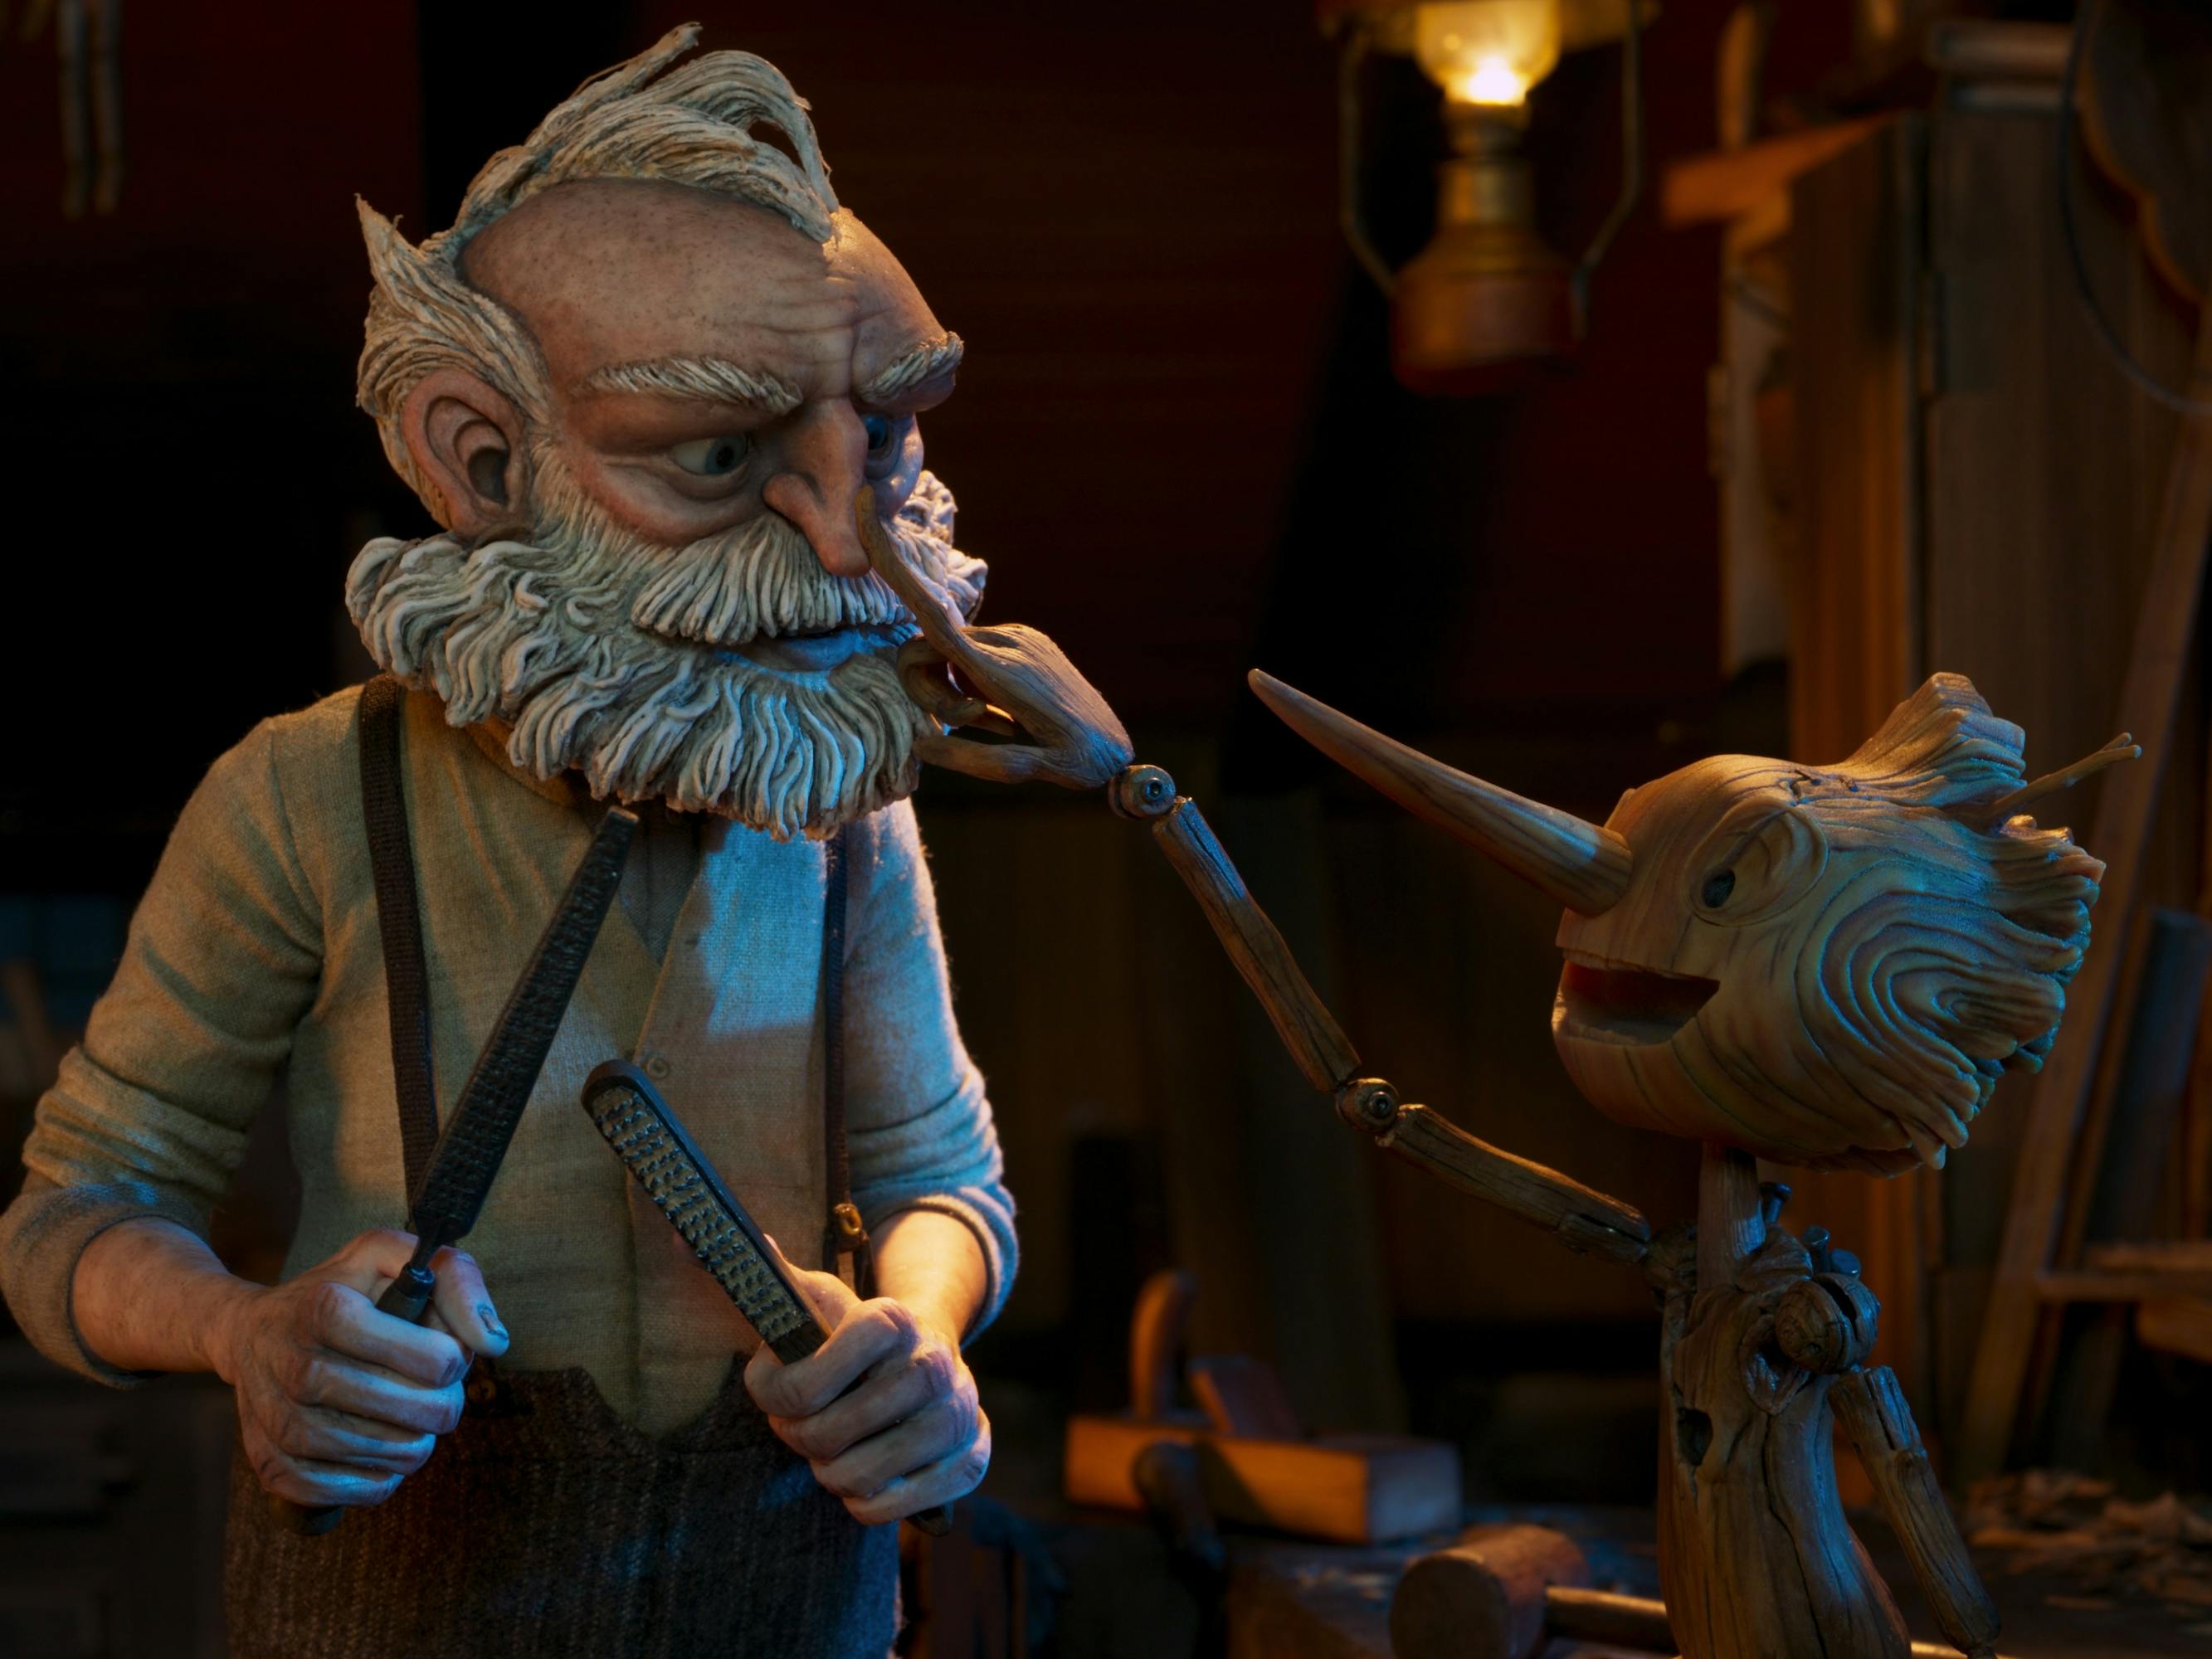 Pinocchio (Gregory Mann) taps Geppetto (David Bradley)'s nose in a dark room.